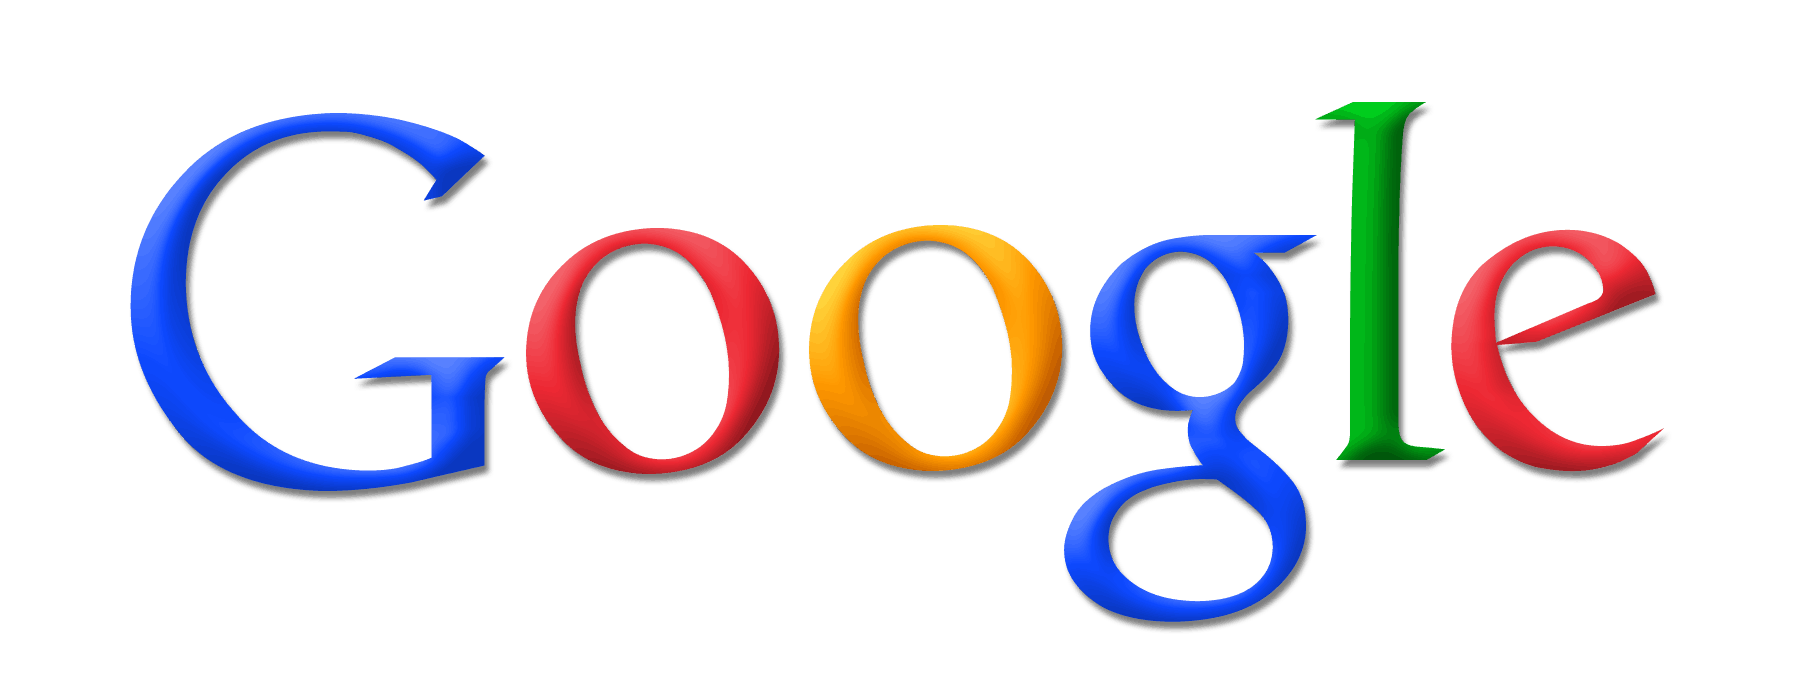 new google logo knockoff1